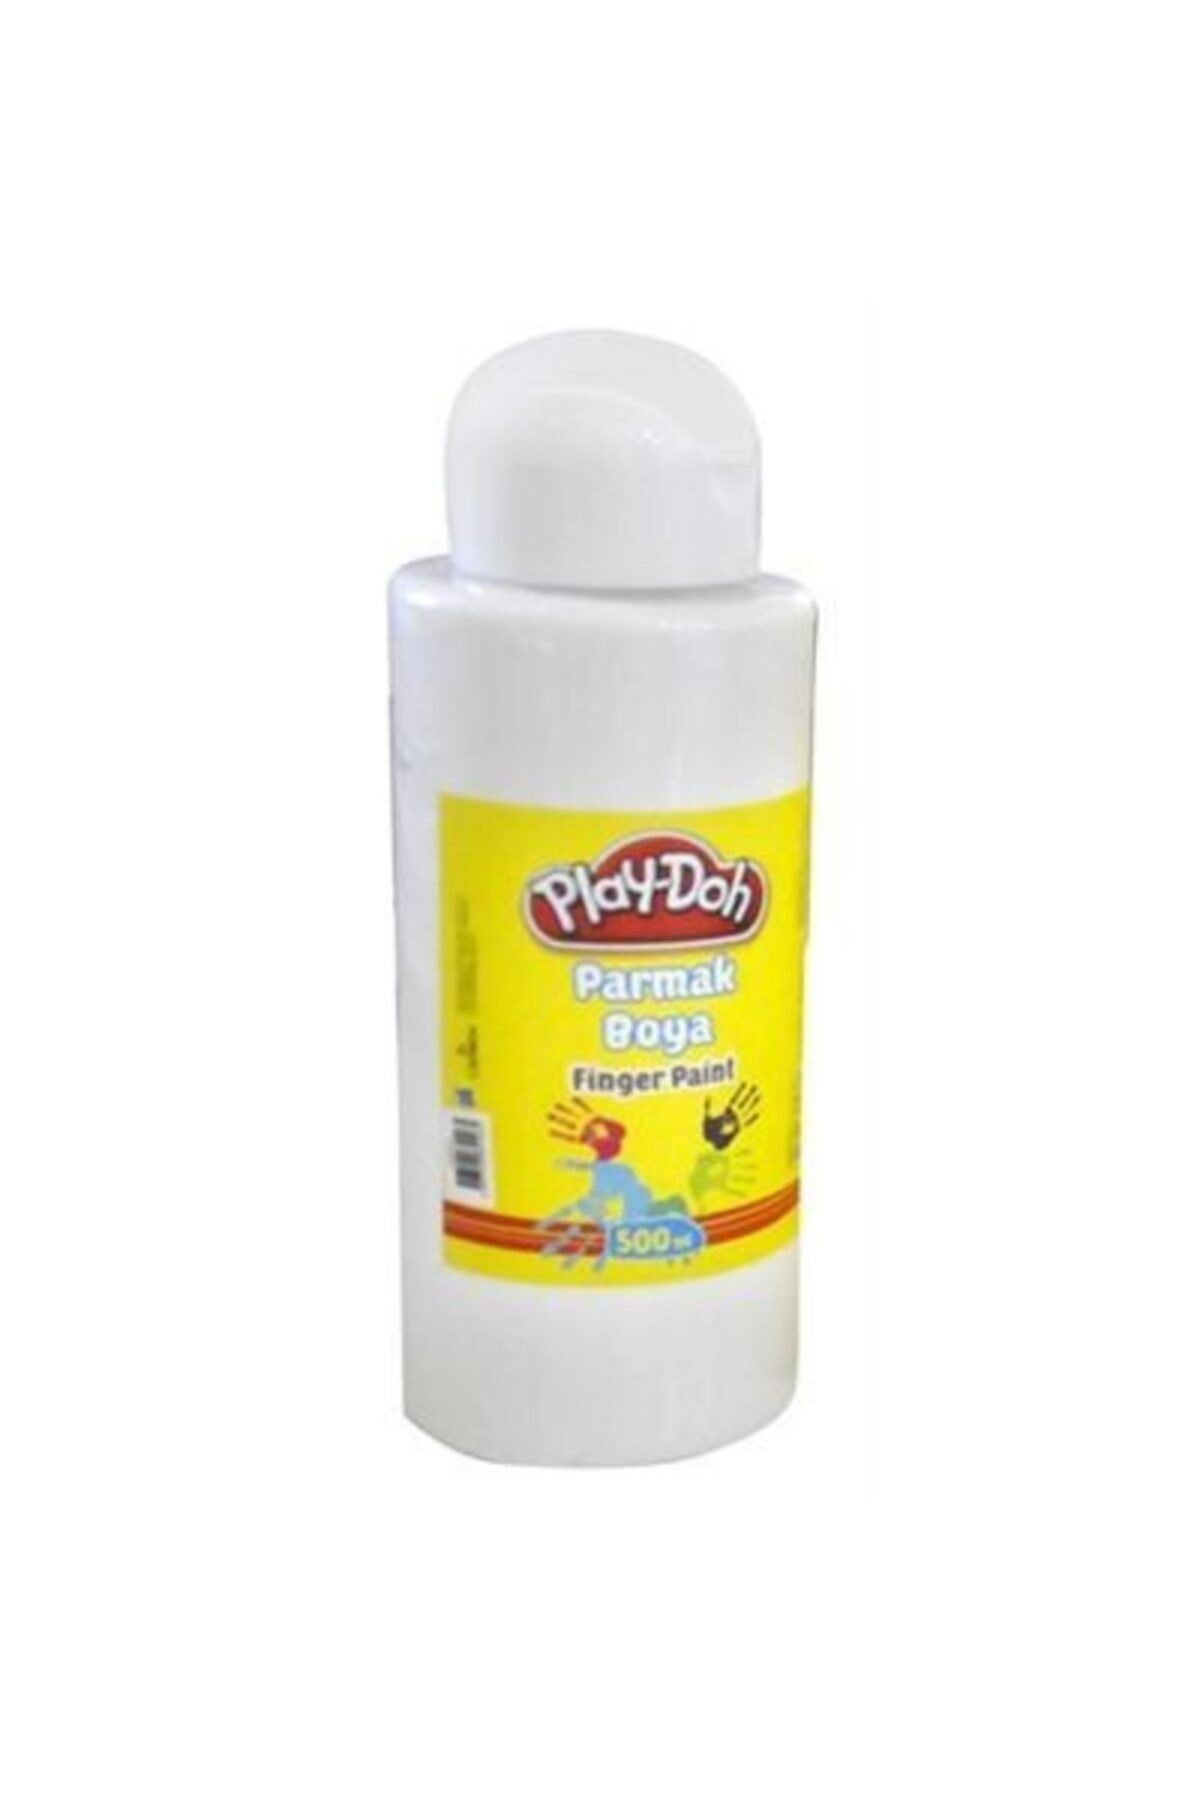 Play Doh Play-doh Parmak Boyası Beyaz 500 ml Pr014